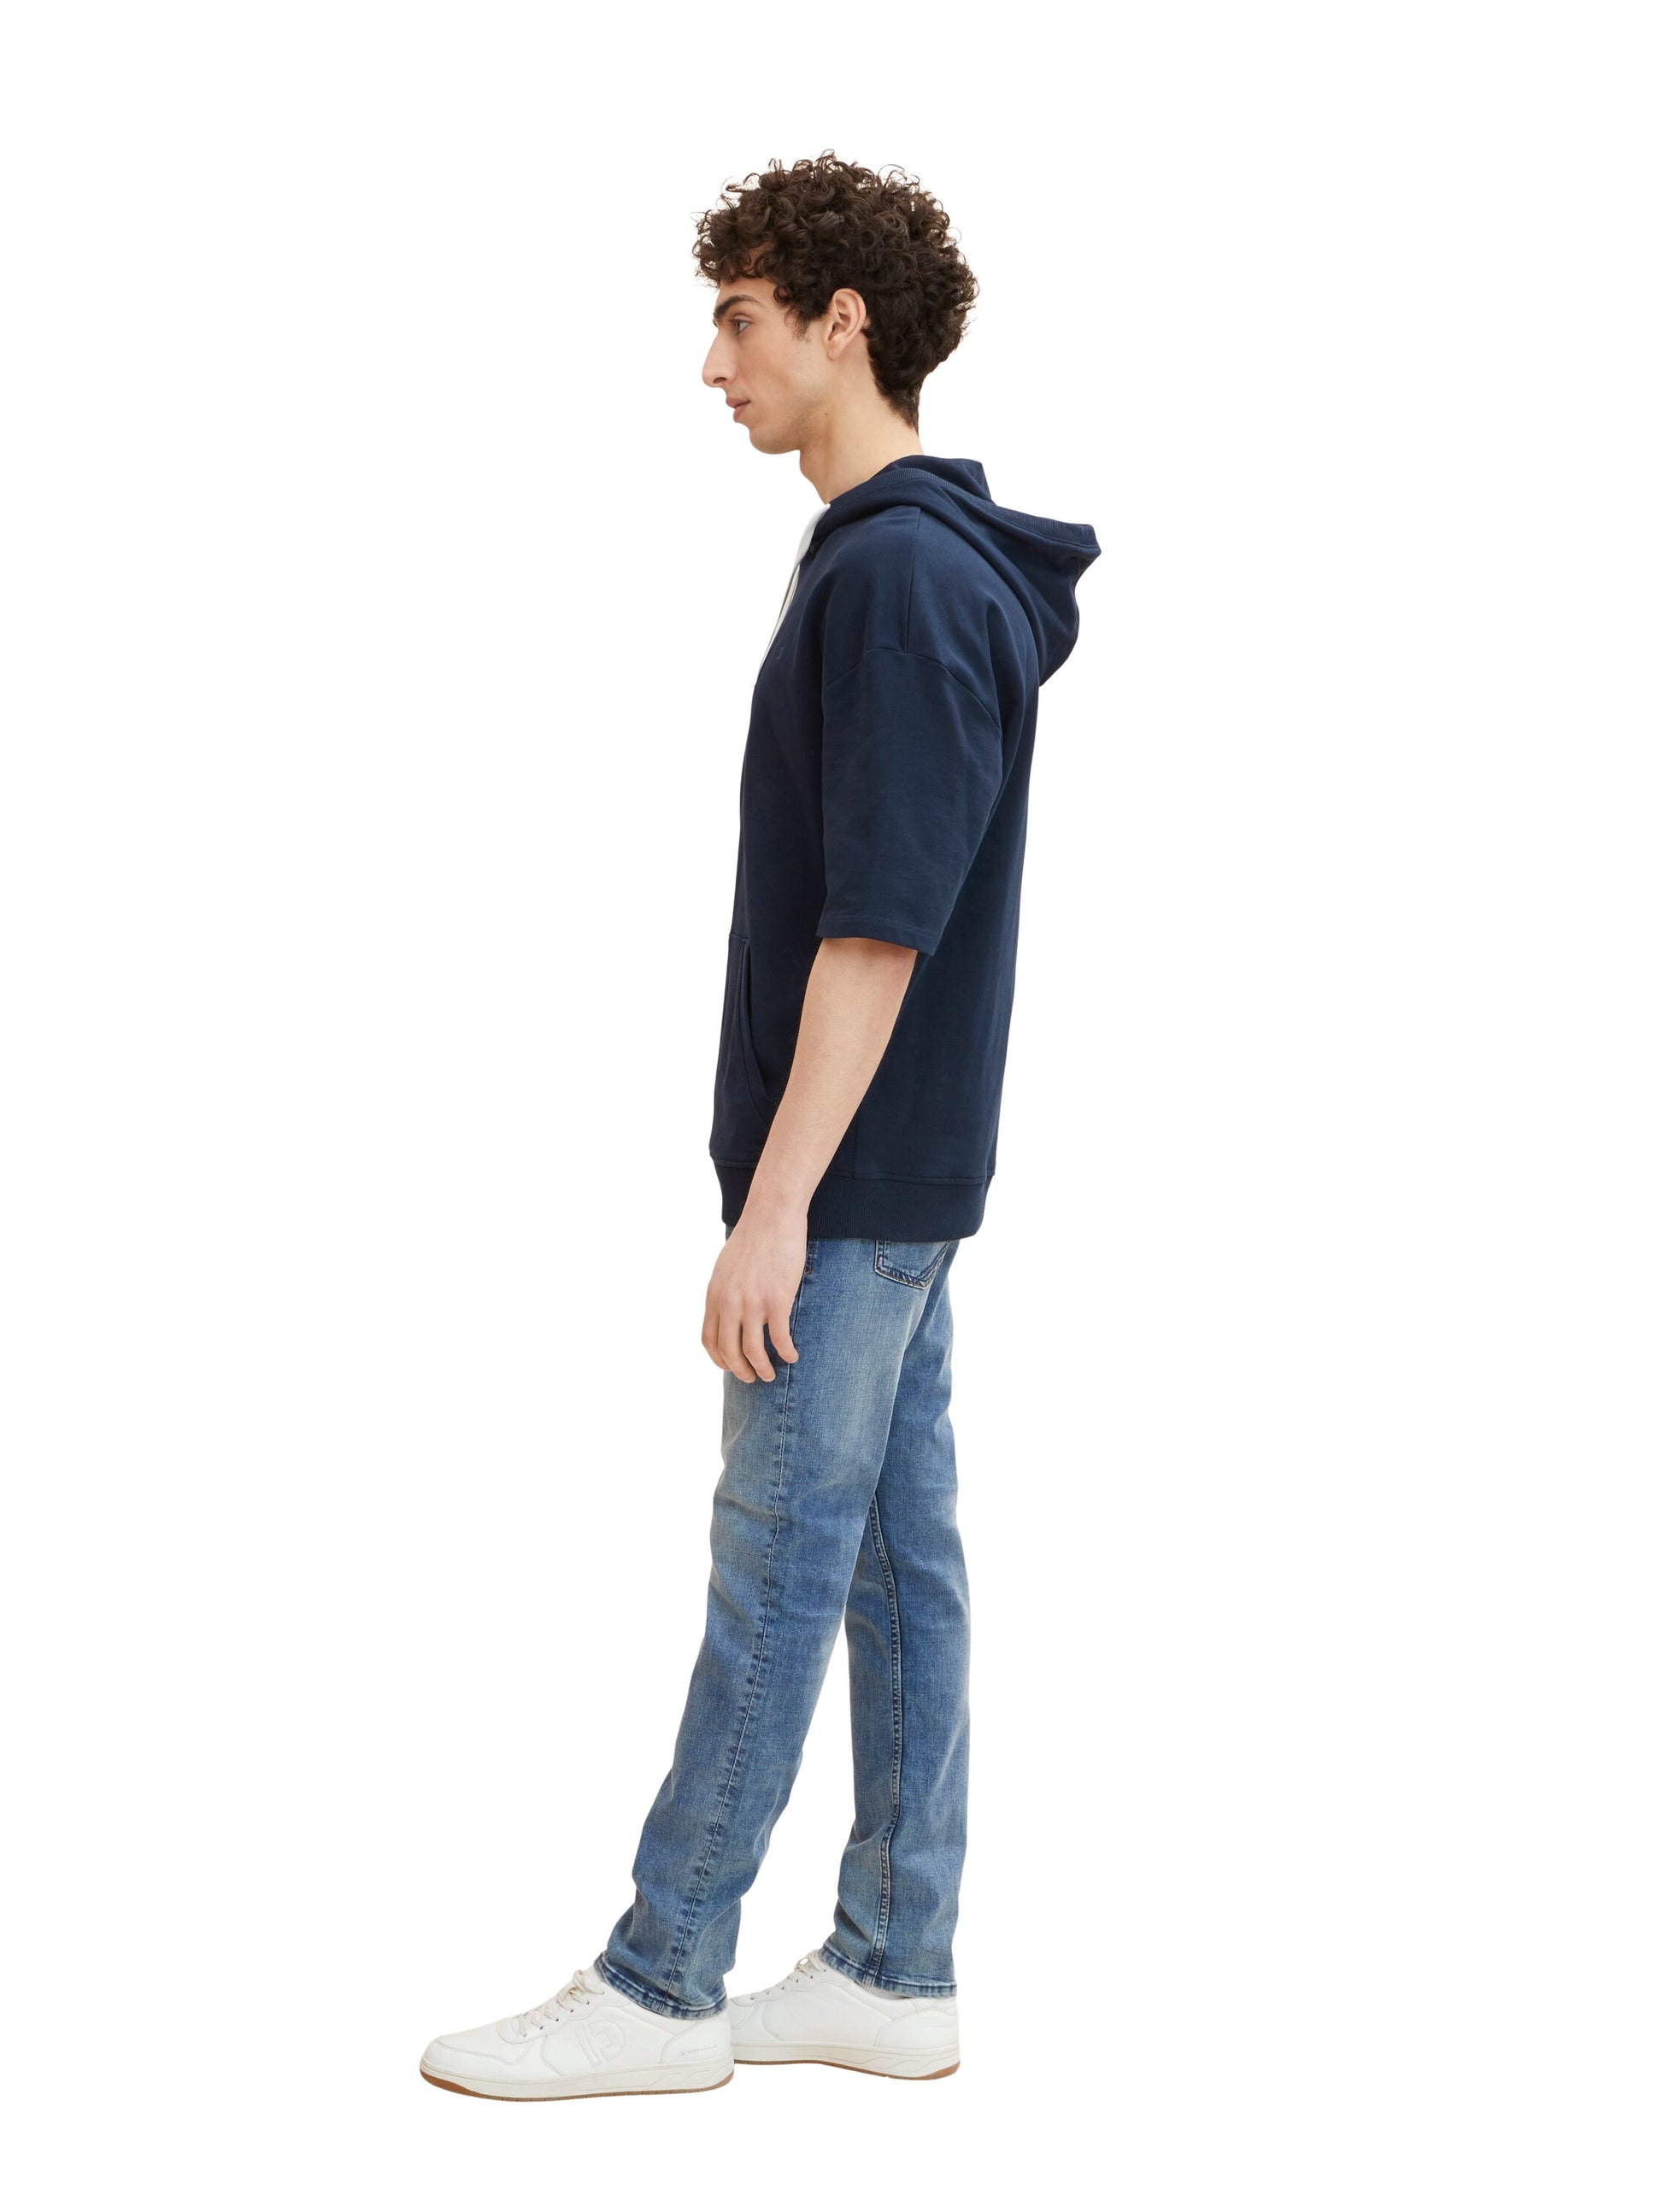 Piers Slim Jeans (Light Stone Wa)